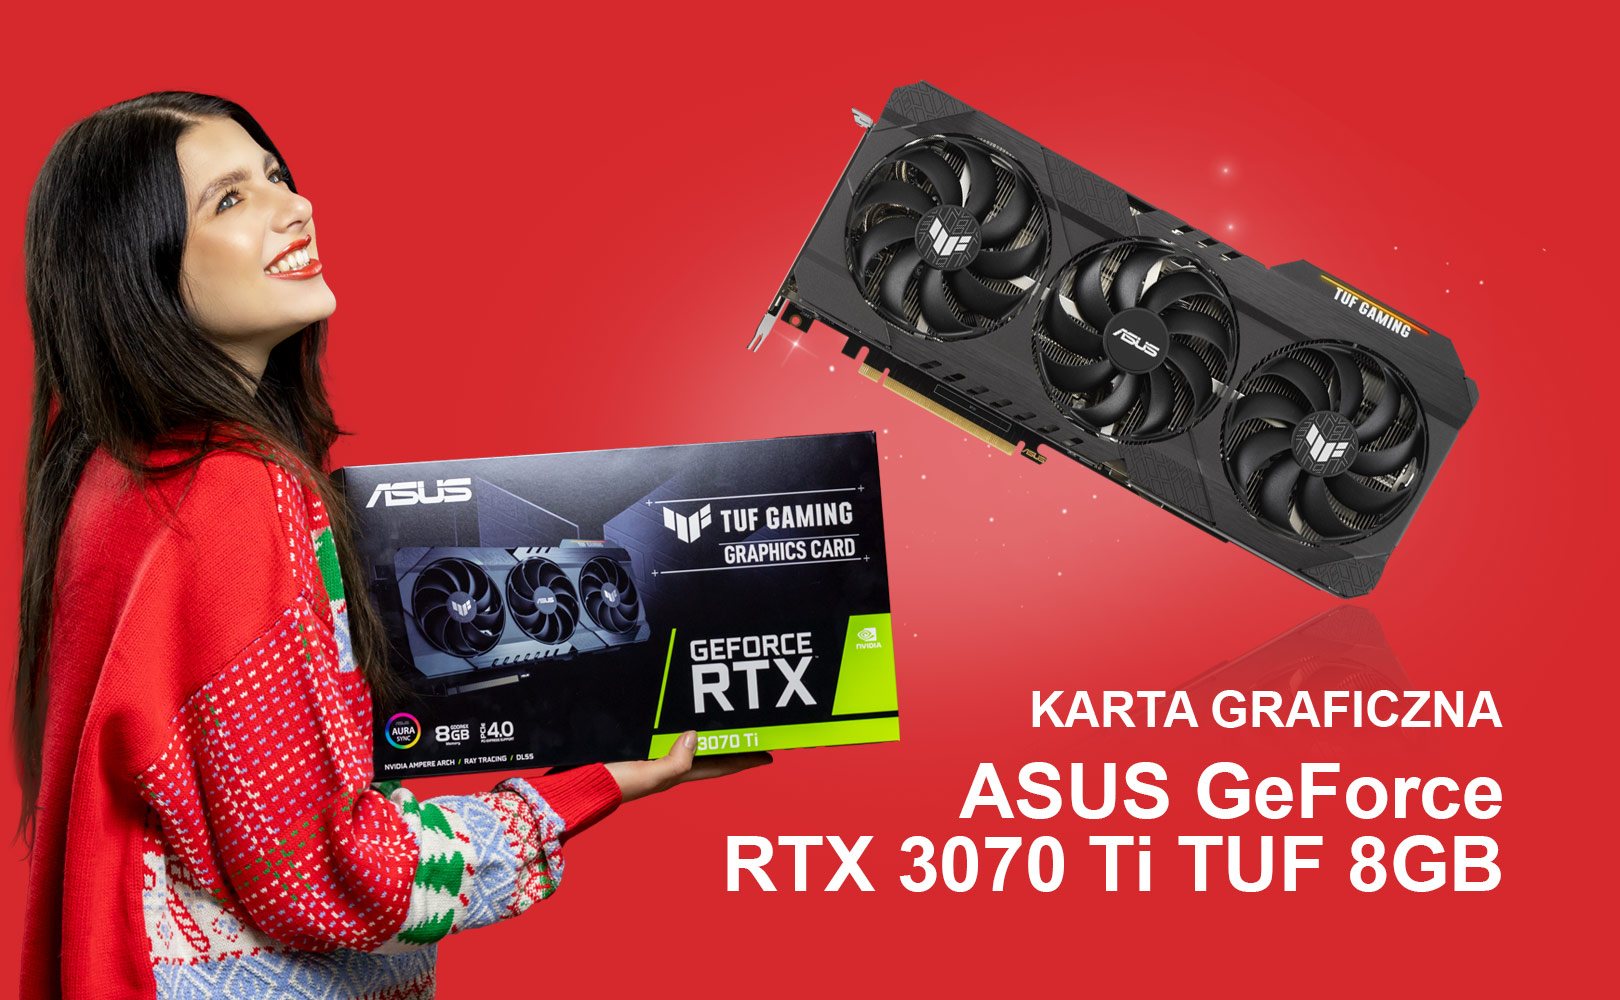 Konkurs - karta graficzna ASUS GeForce RTX 3070 Ti TUF 8GB